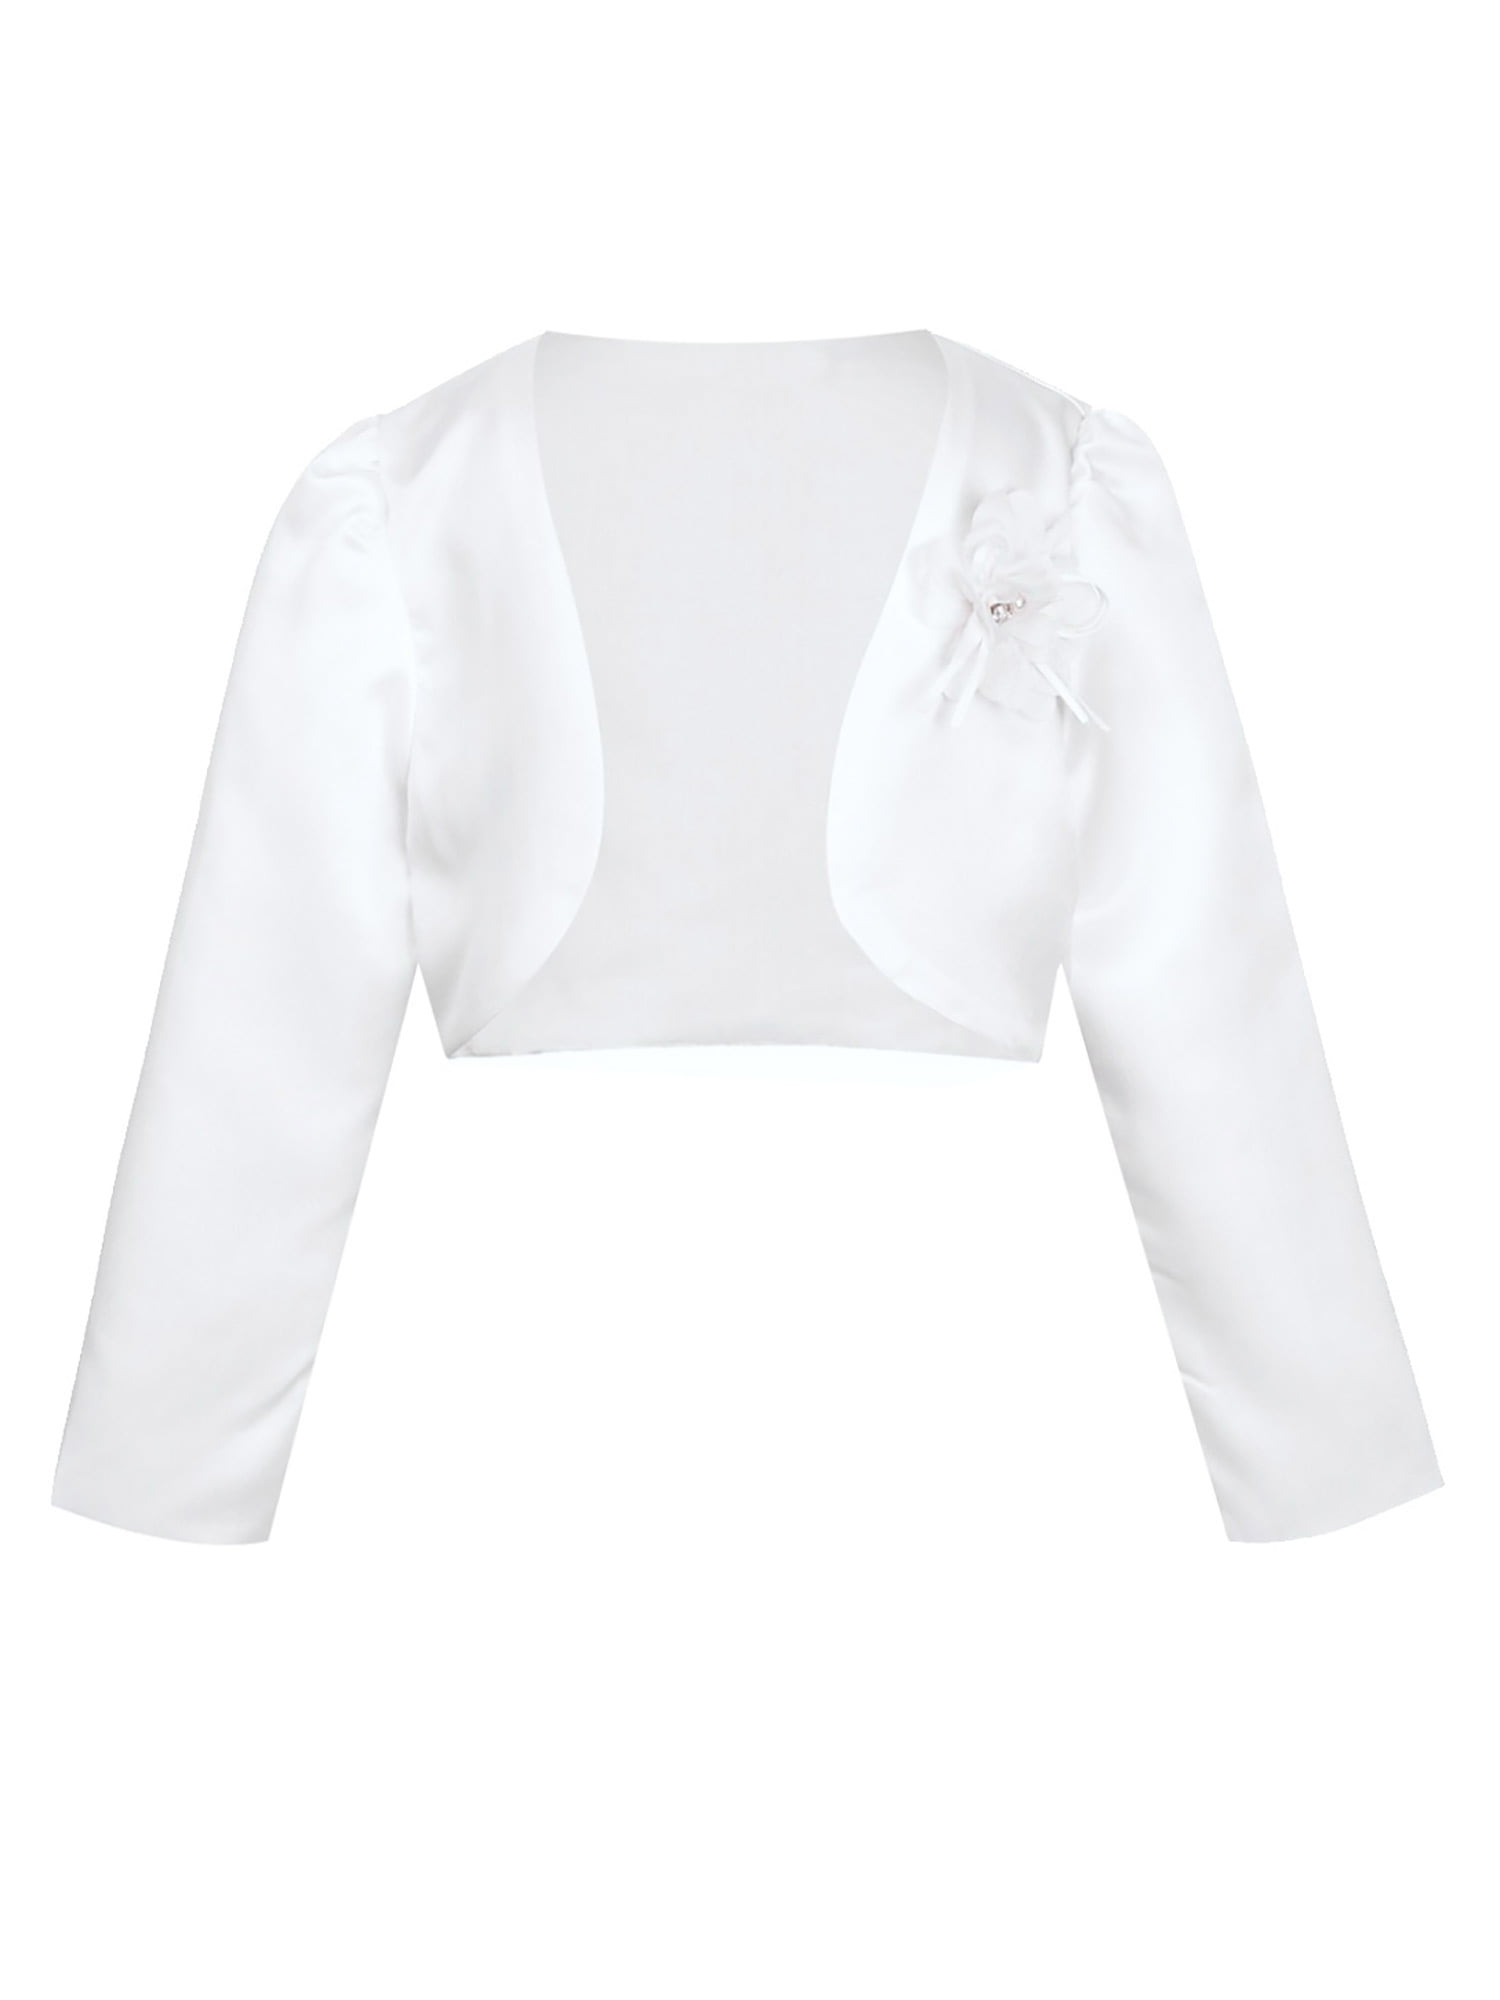 Girls Bolero Shrugs Long Sleeve Cotton Cardigan Jacket Sweater for Little Girls Hot Dress Cover up